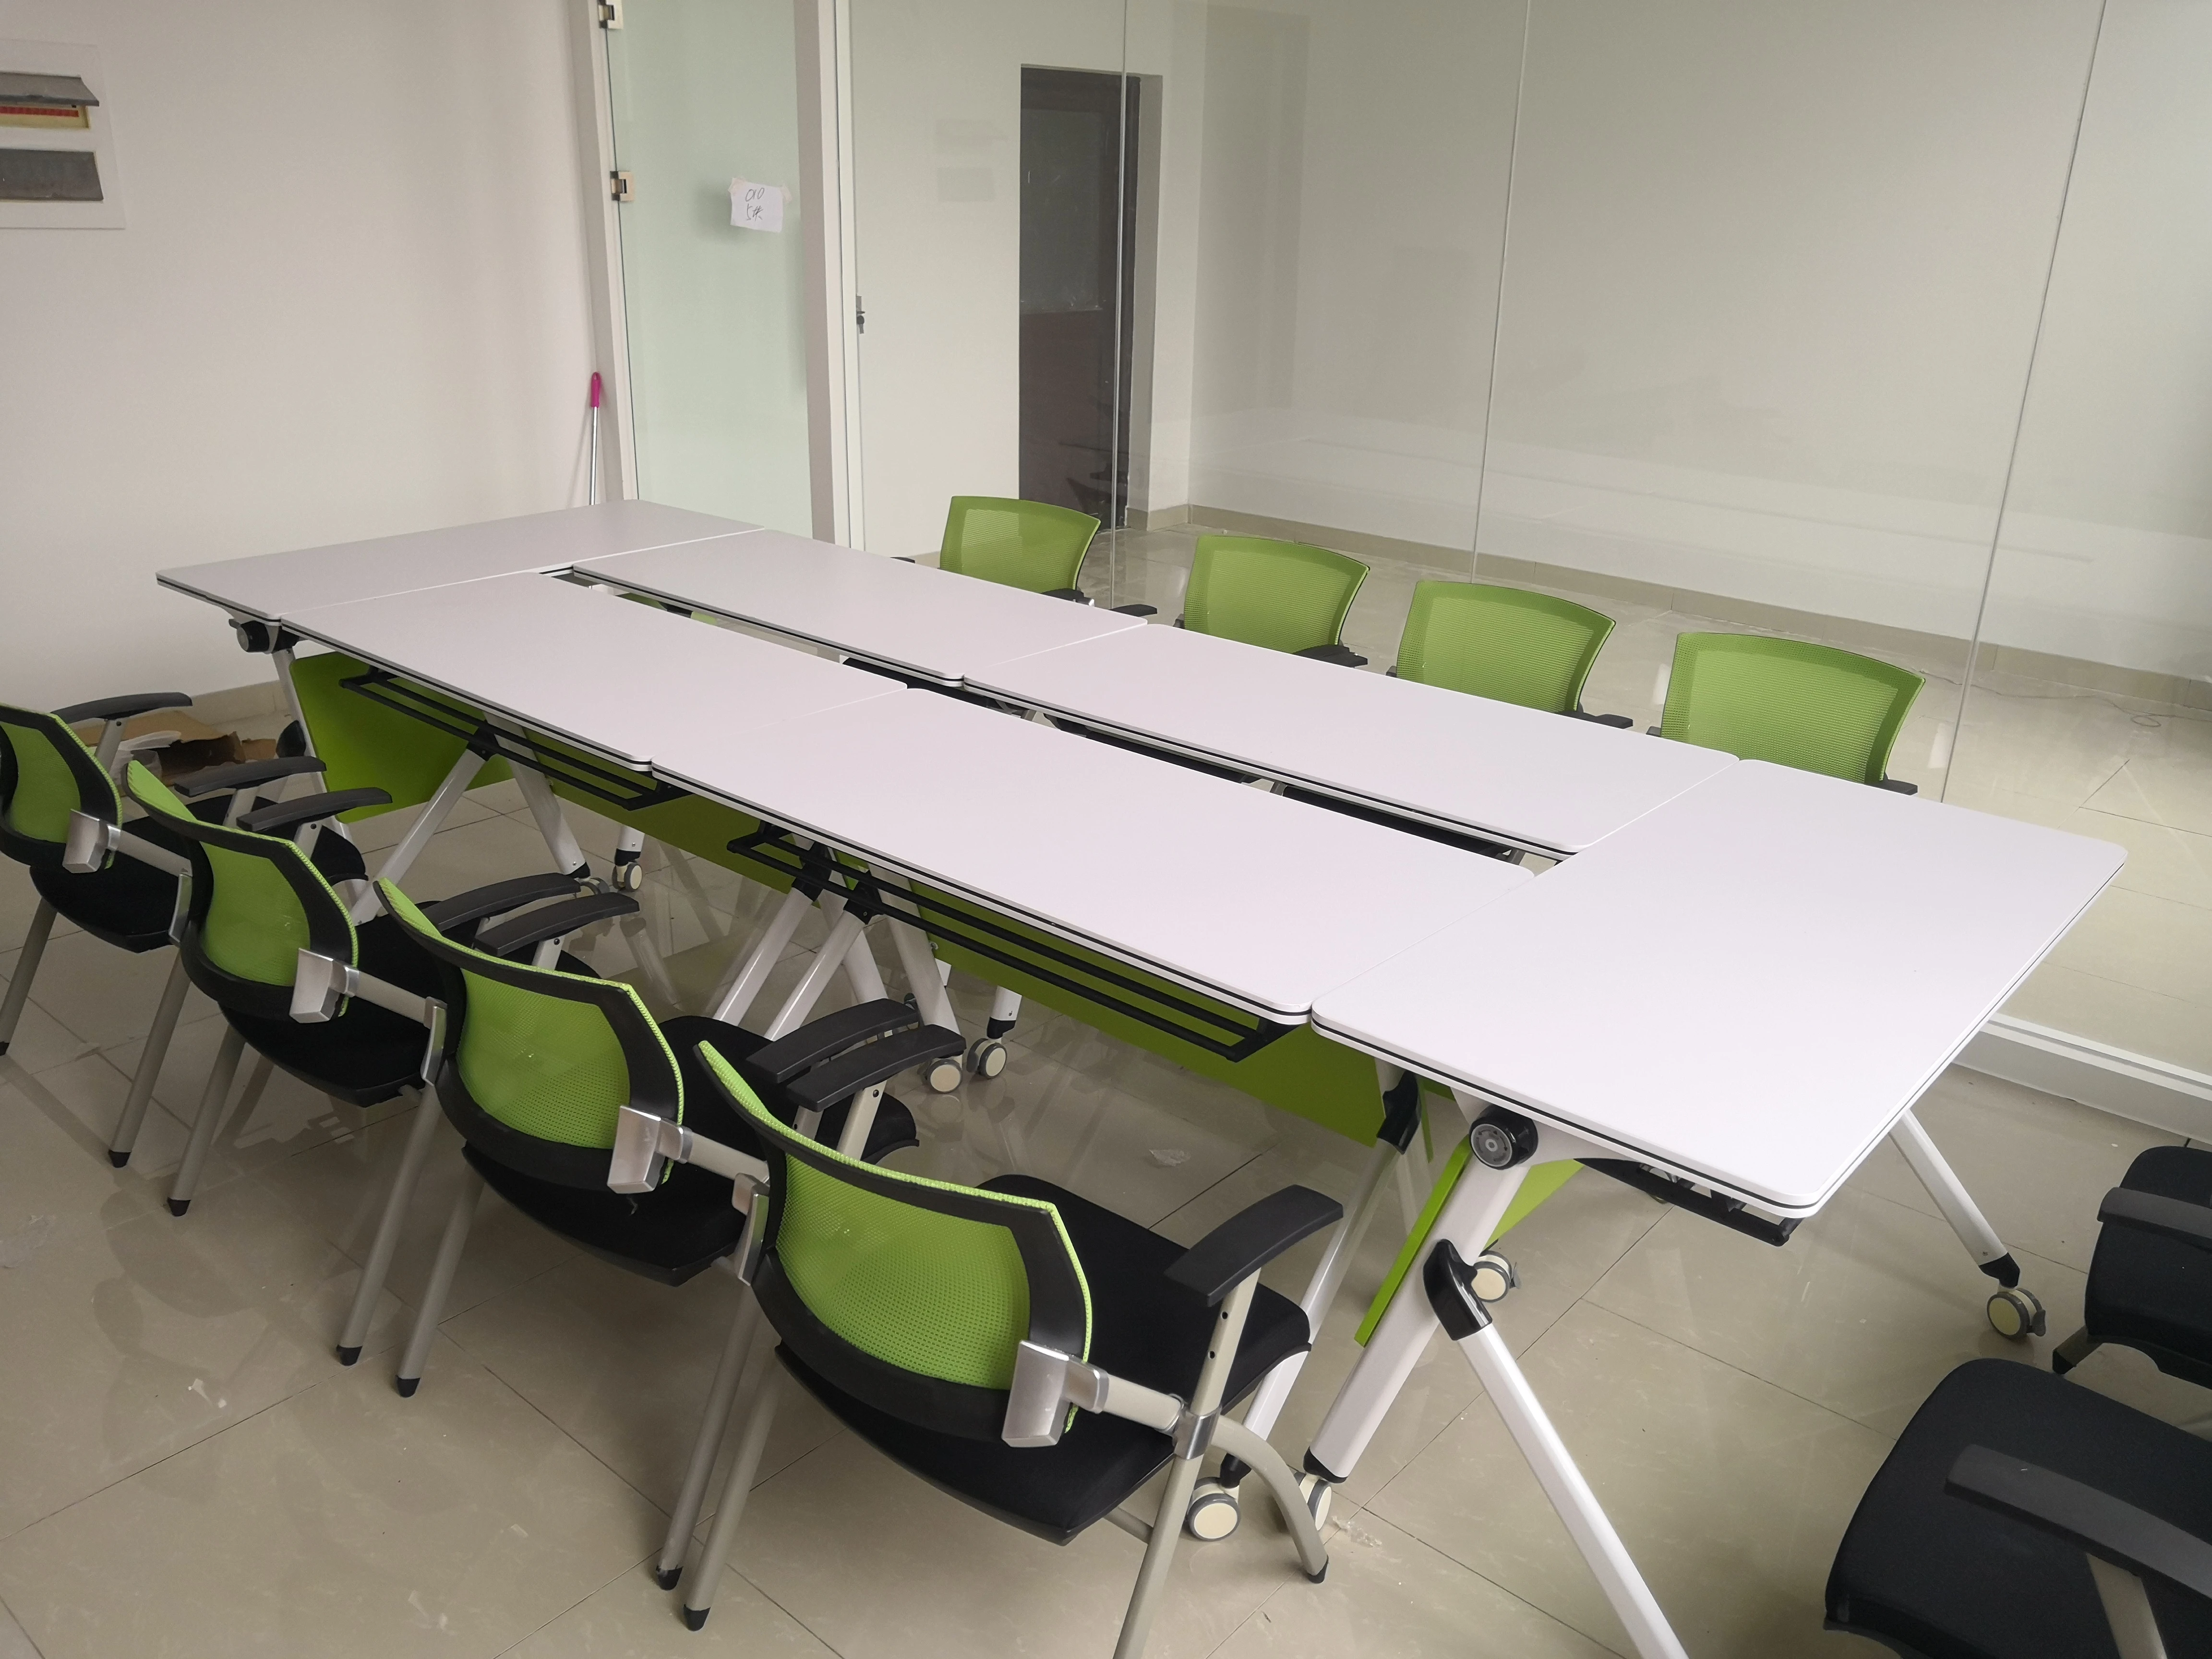 Pochar Z26 Folding Desk Mobile conference training table/School learning desk with wheels/Office furniture